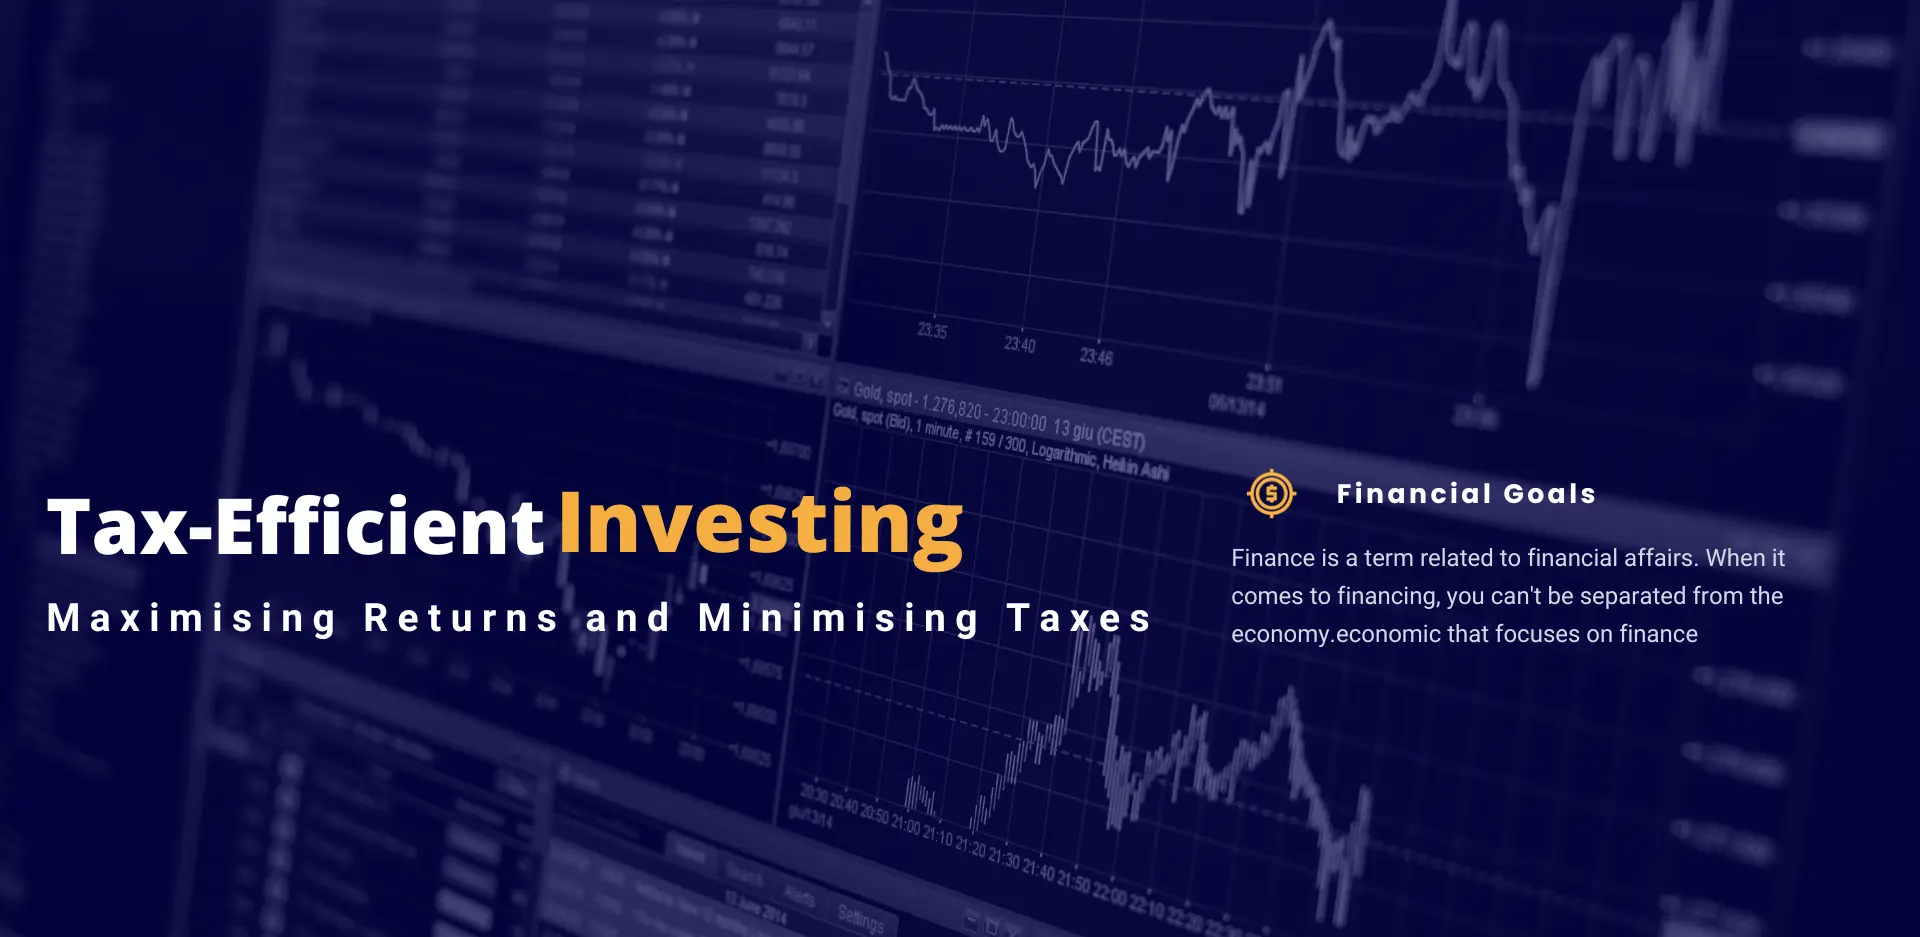 Tax-Efficient Investing Maximising Returns and Minimising Taxes